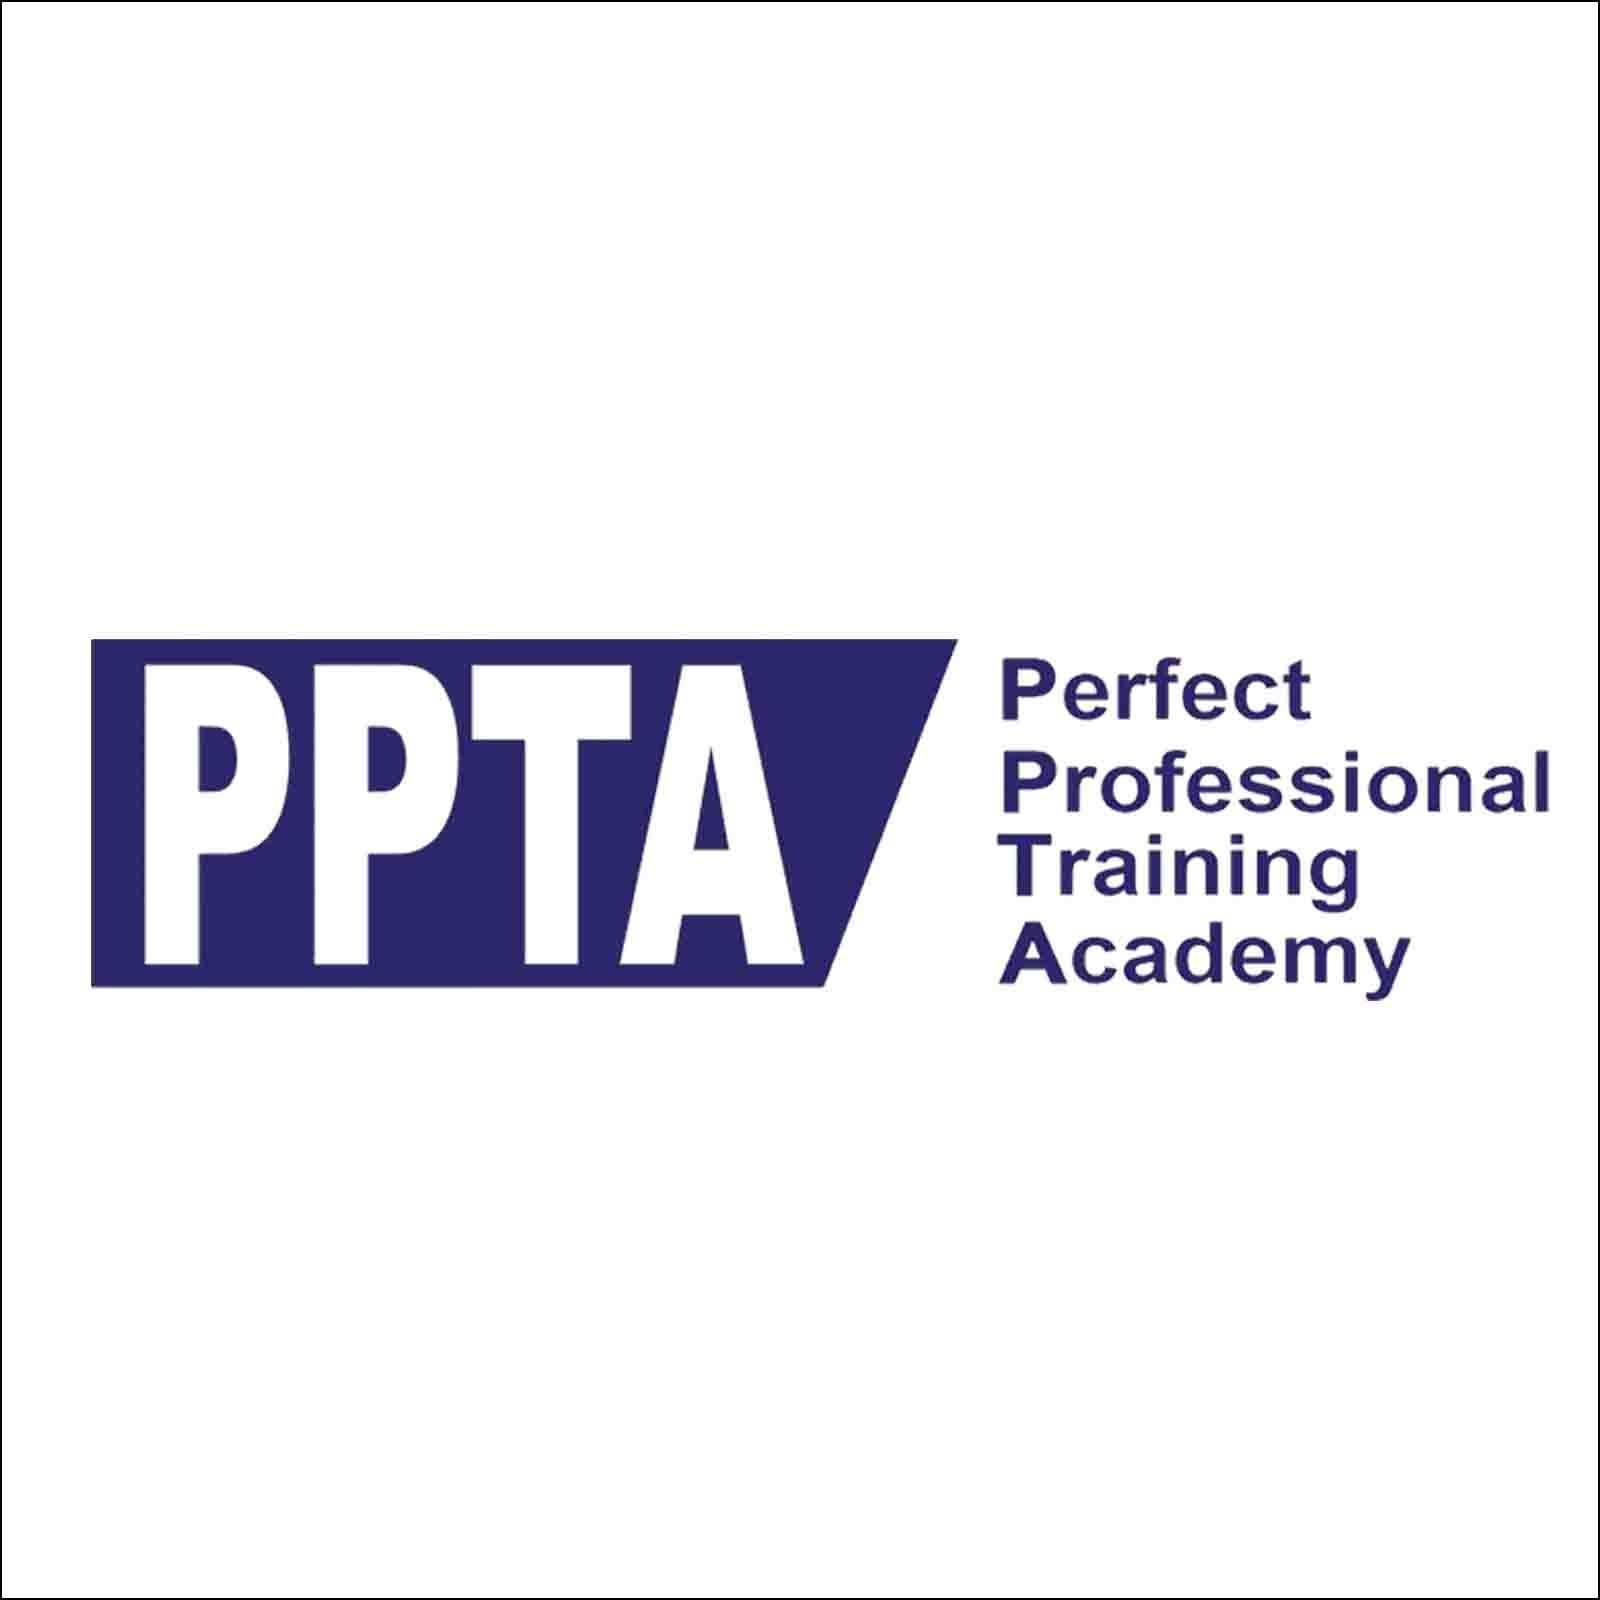 Perfect Professional Training Academy|Accounting Services|Professional Services